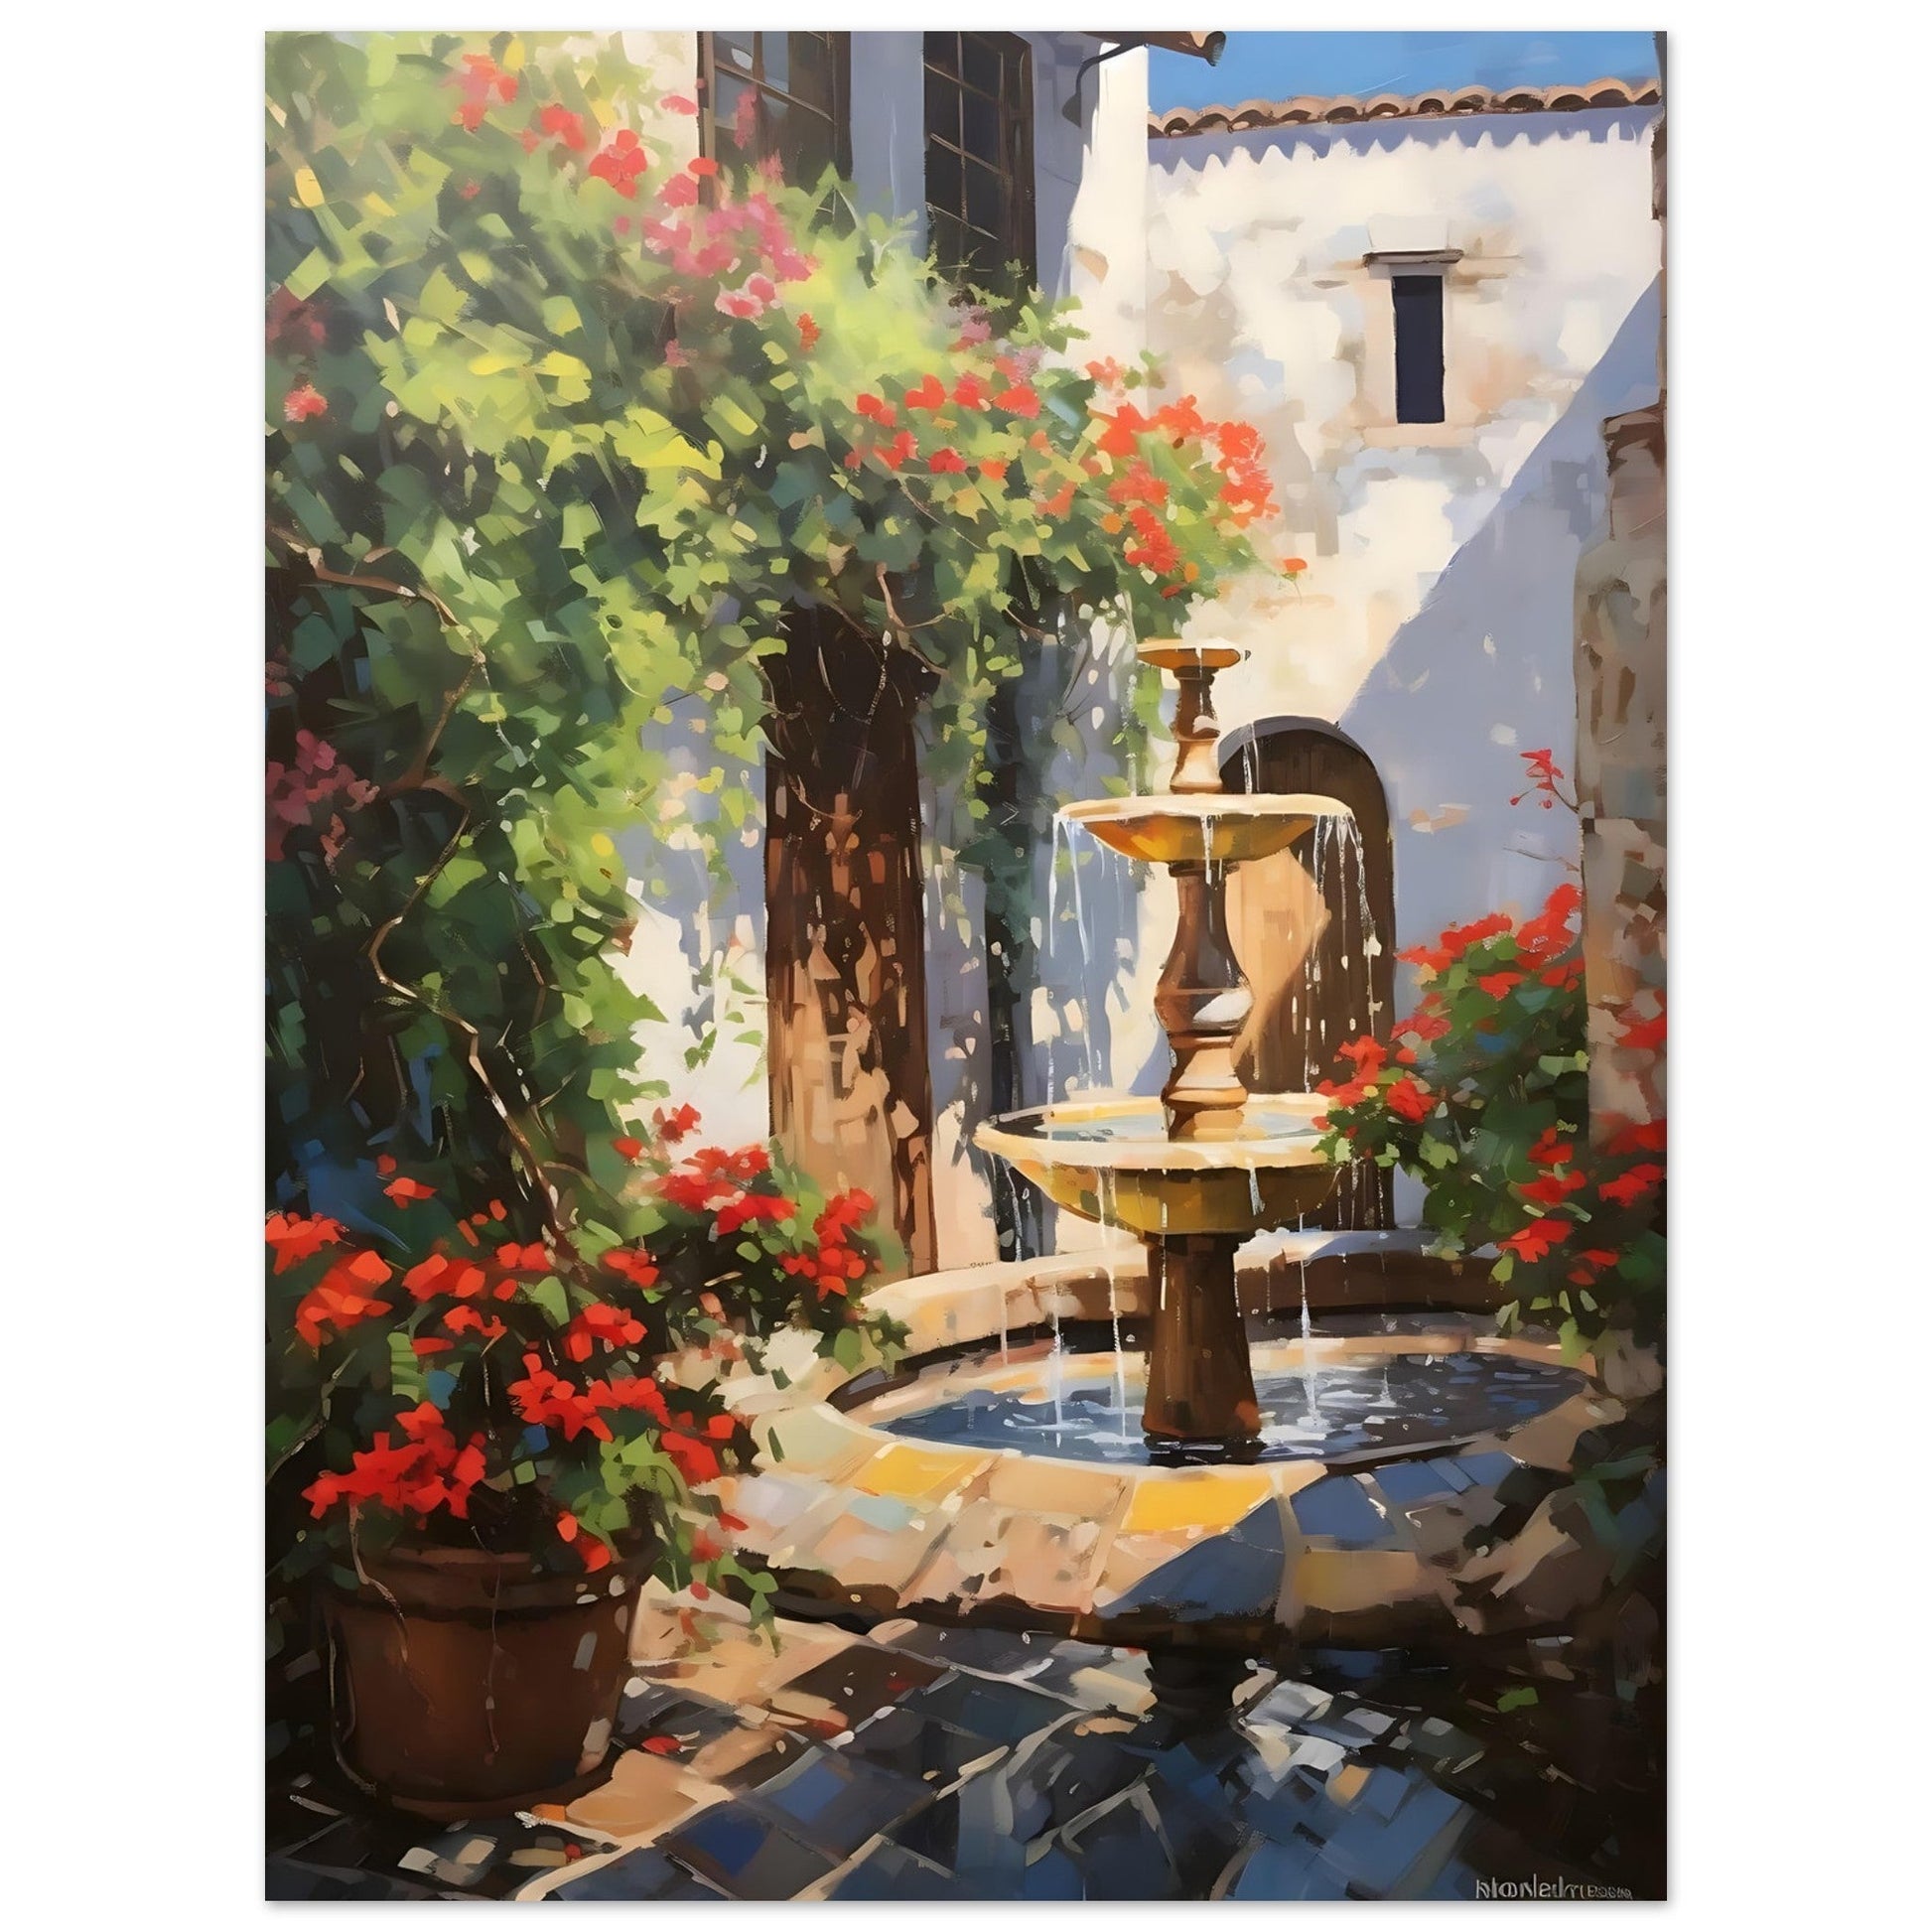 Greece - Village Cobbled Courtyard Scene, Fountain, Mediterranean art print, Travel Poster, #illieeart #